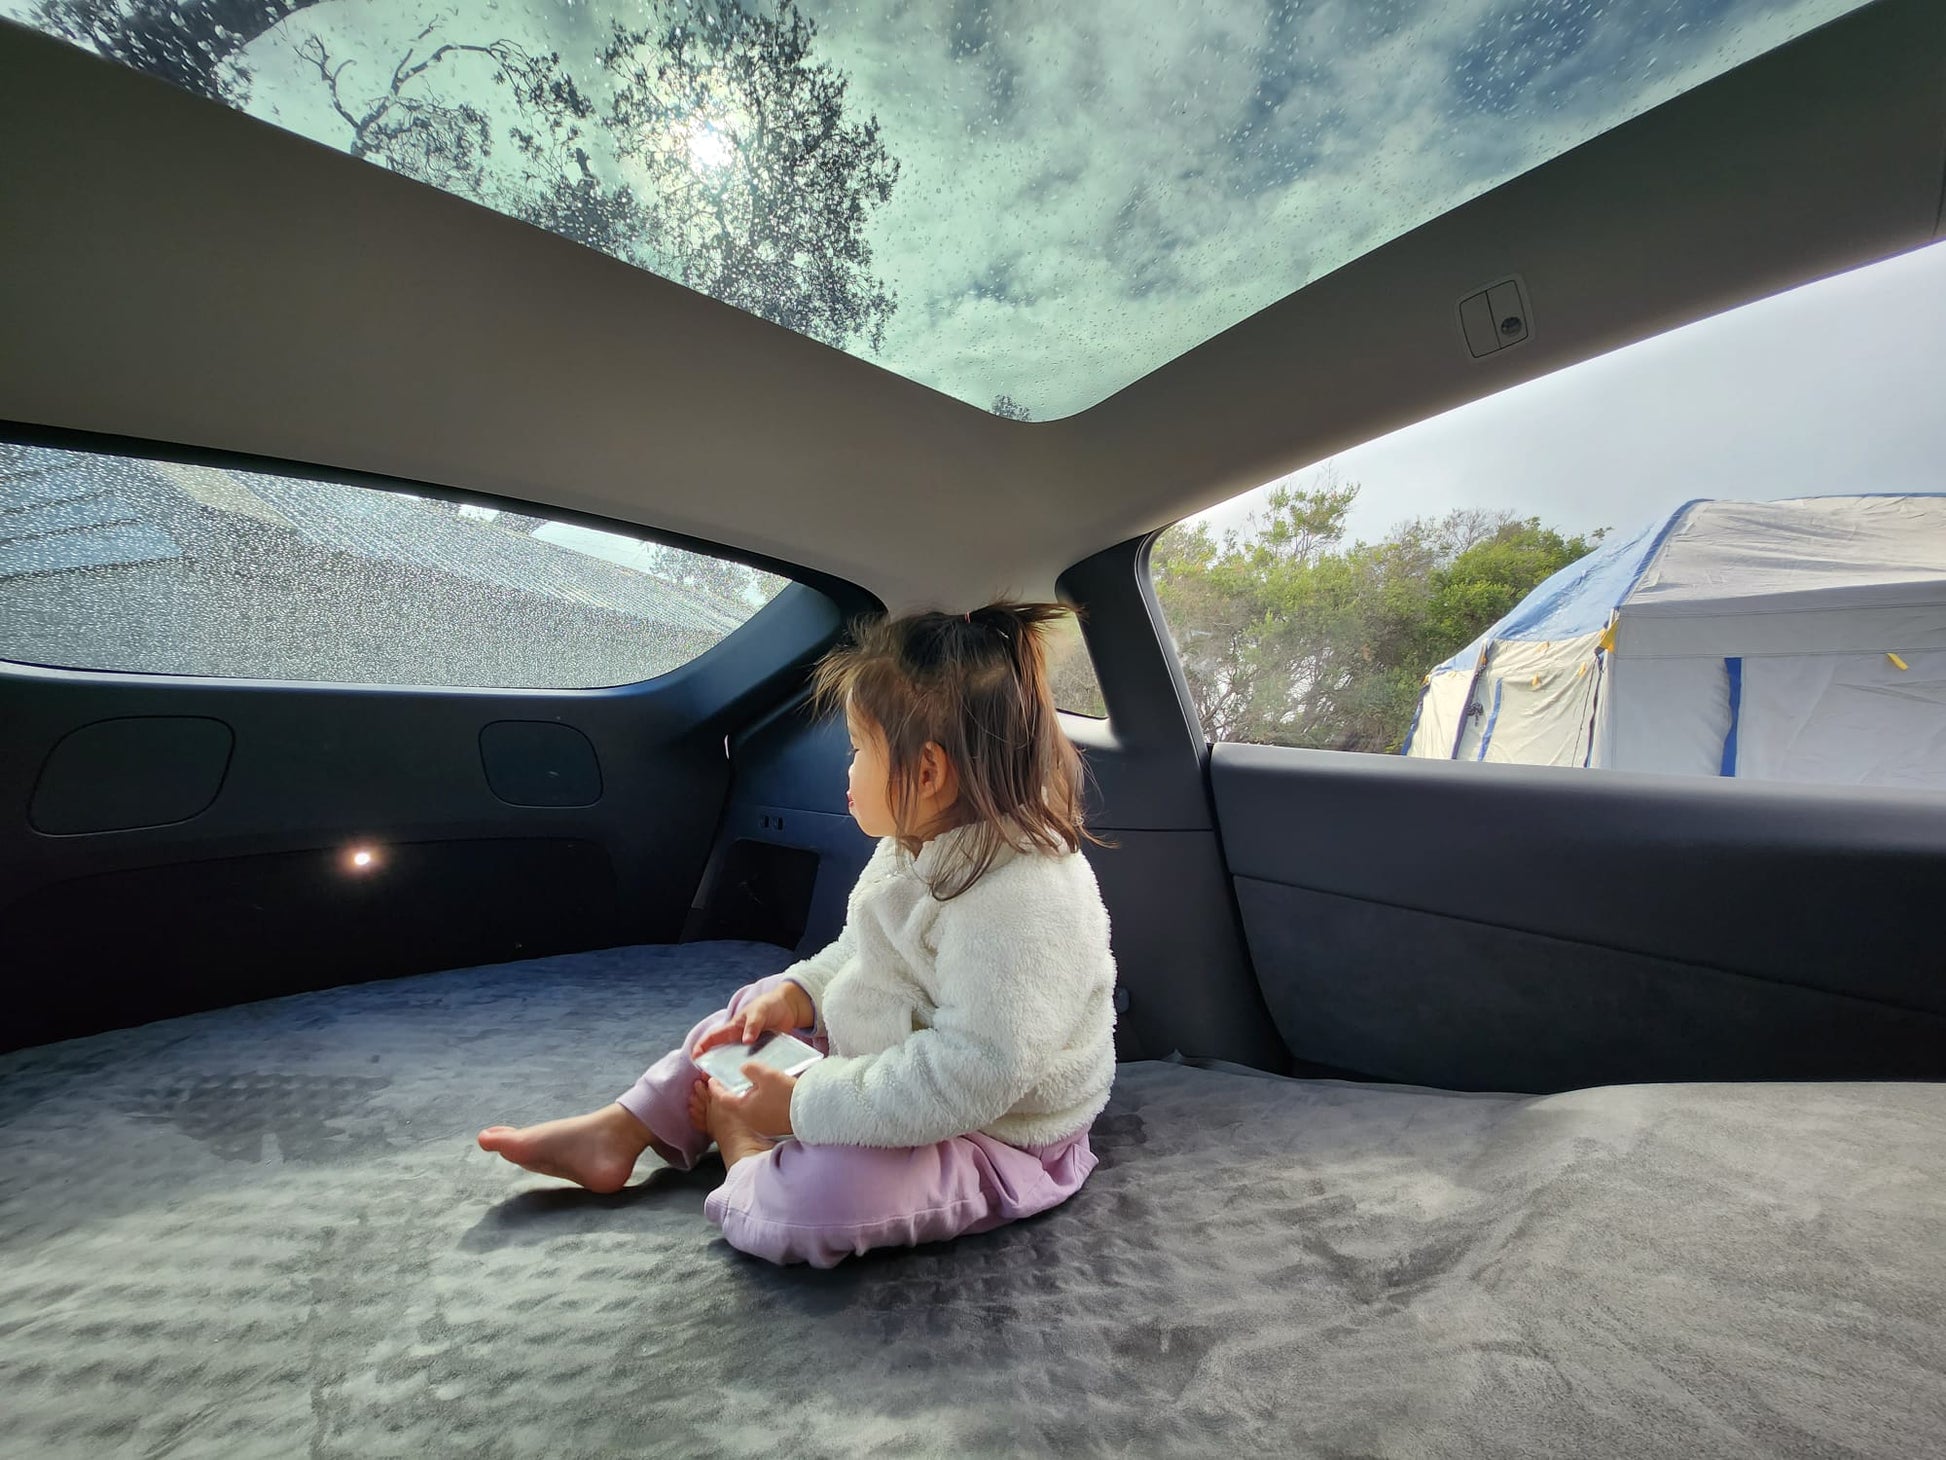 Inflatable mattress - Tesla Model 3